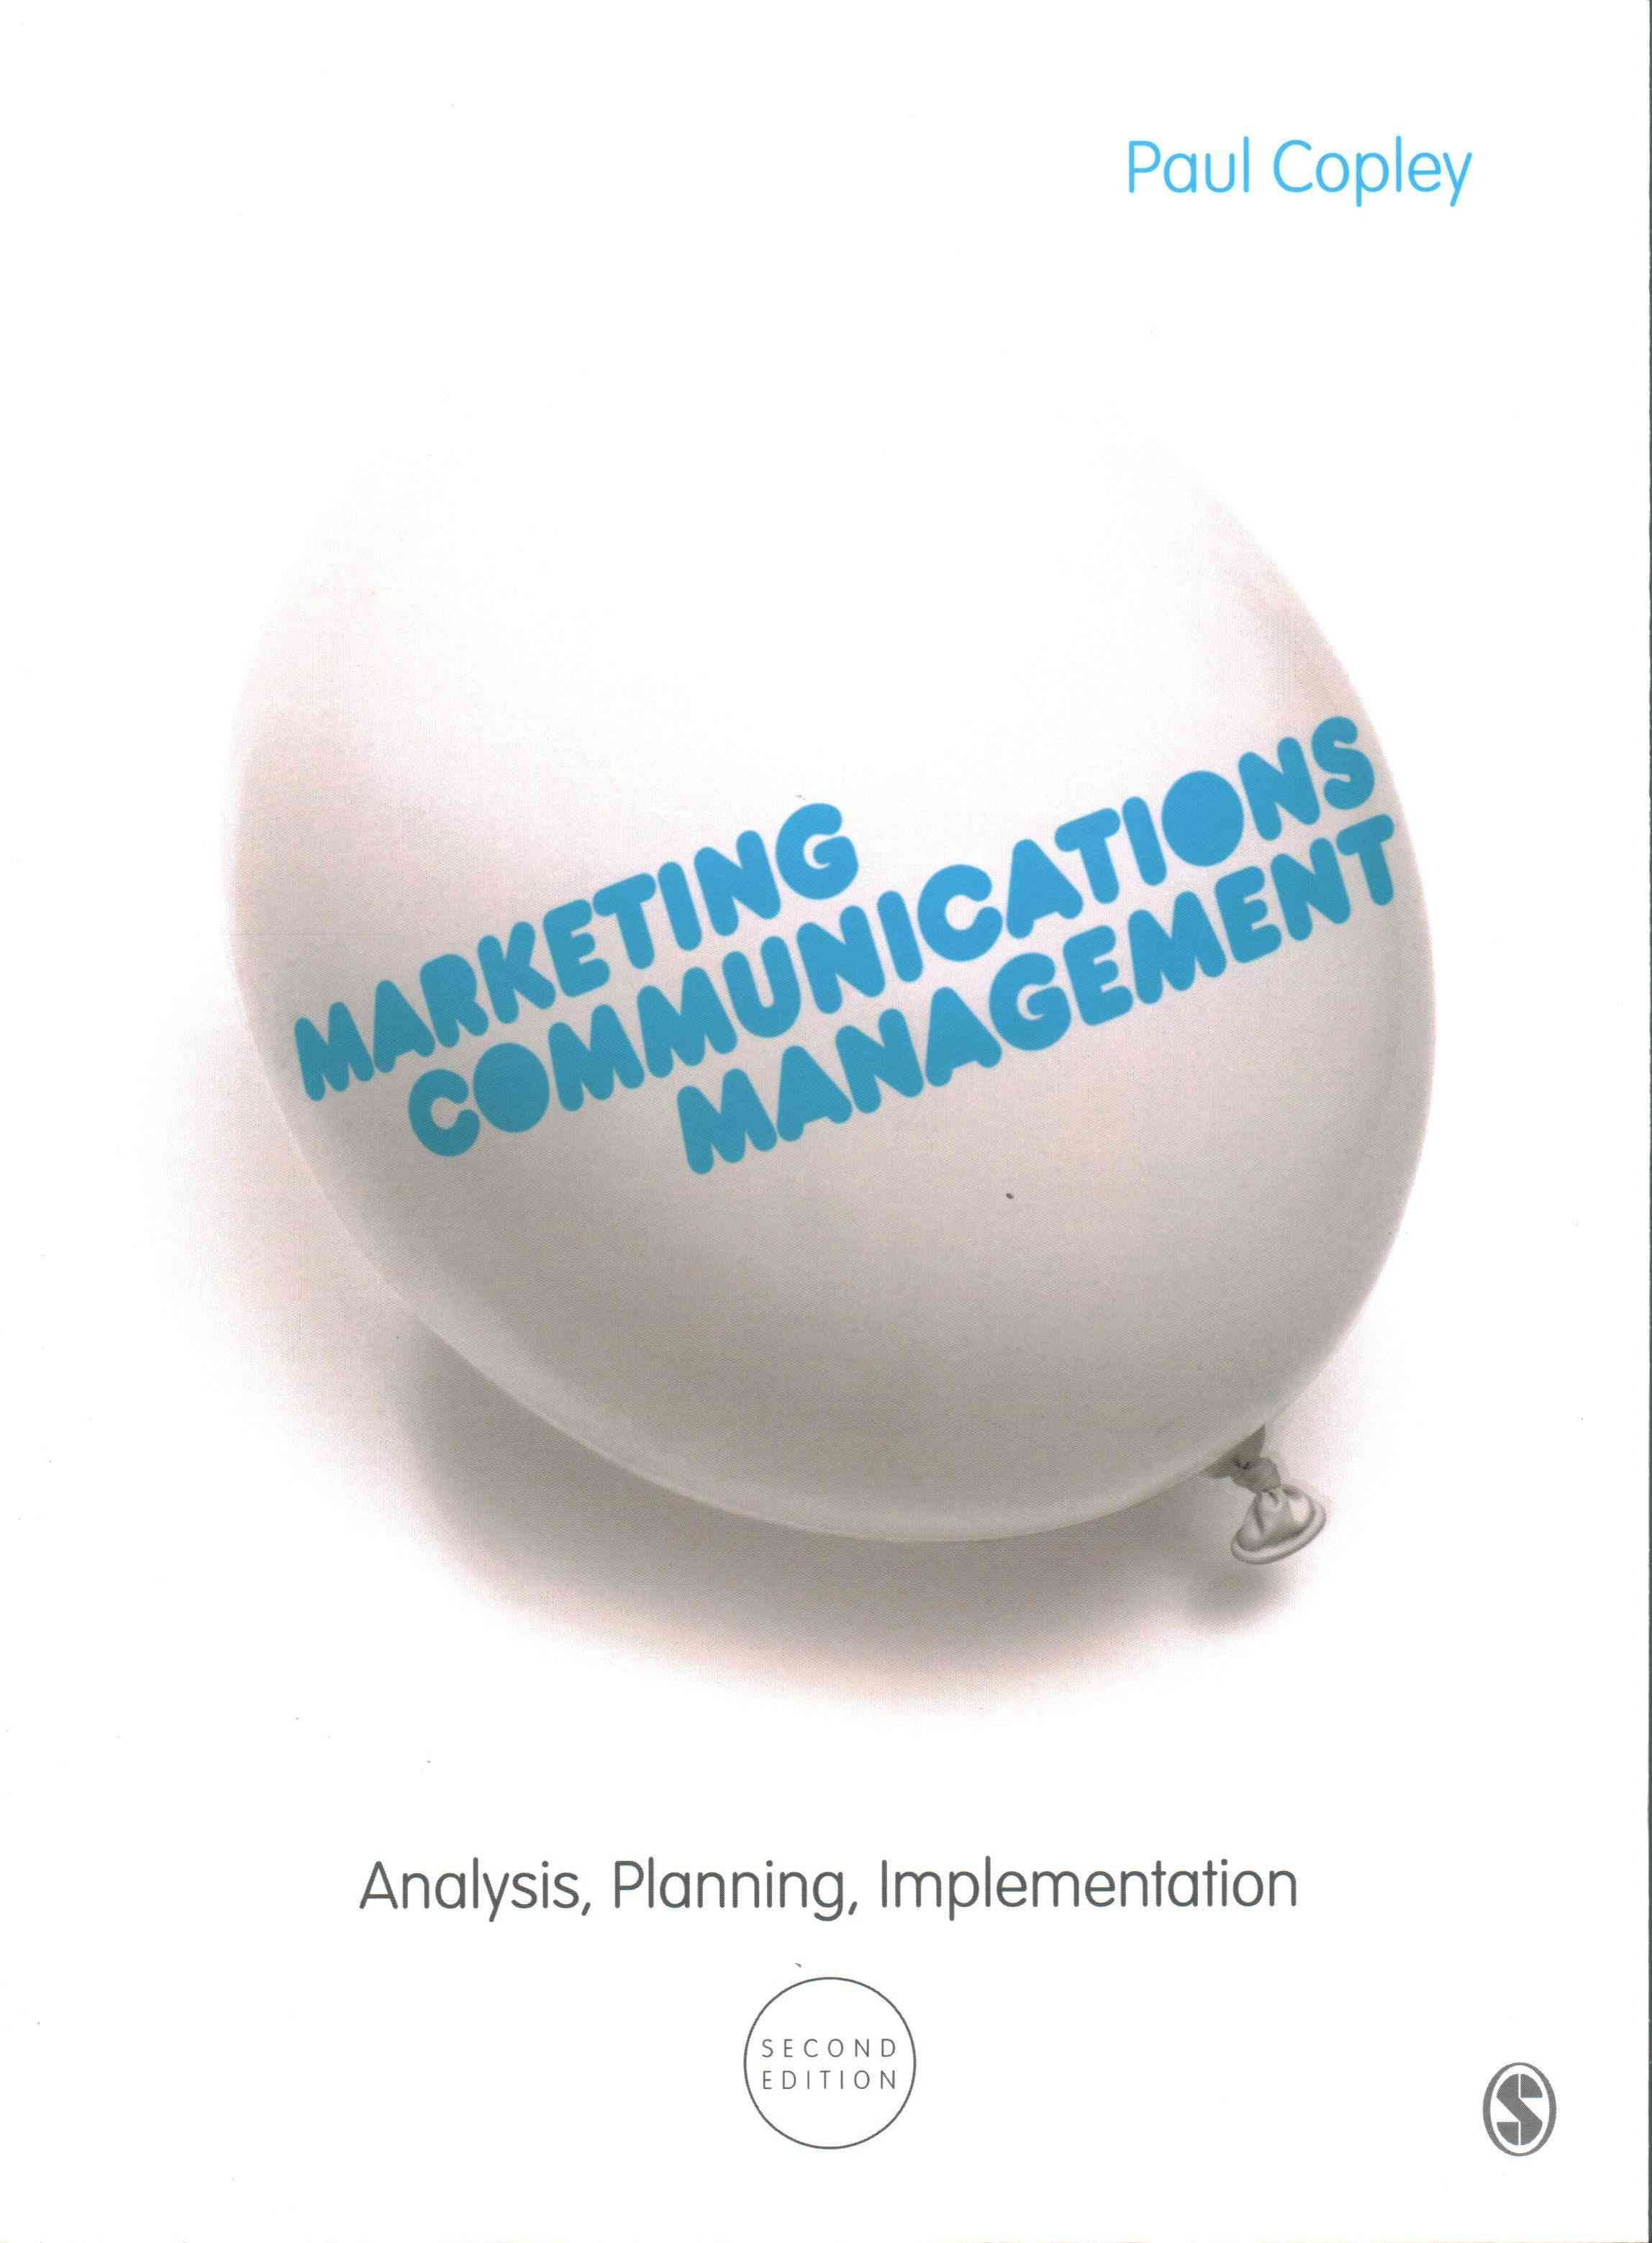 Marketing Communications Management